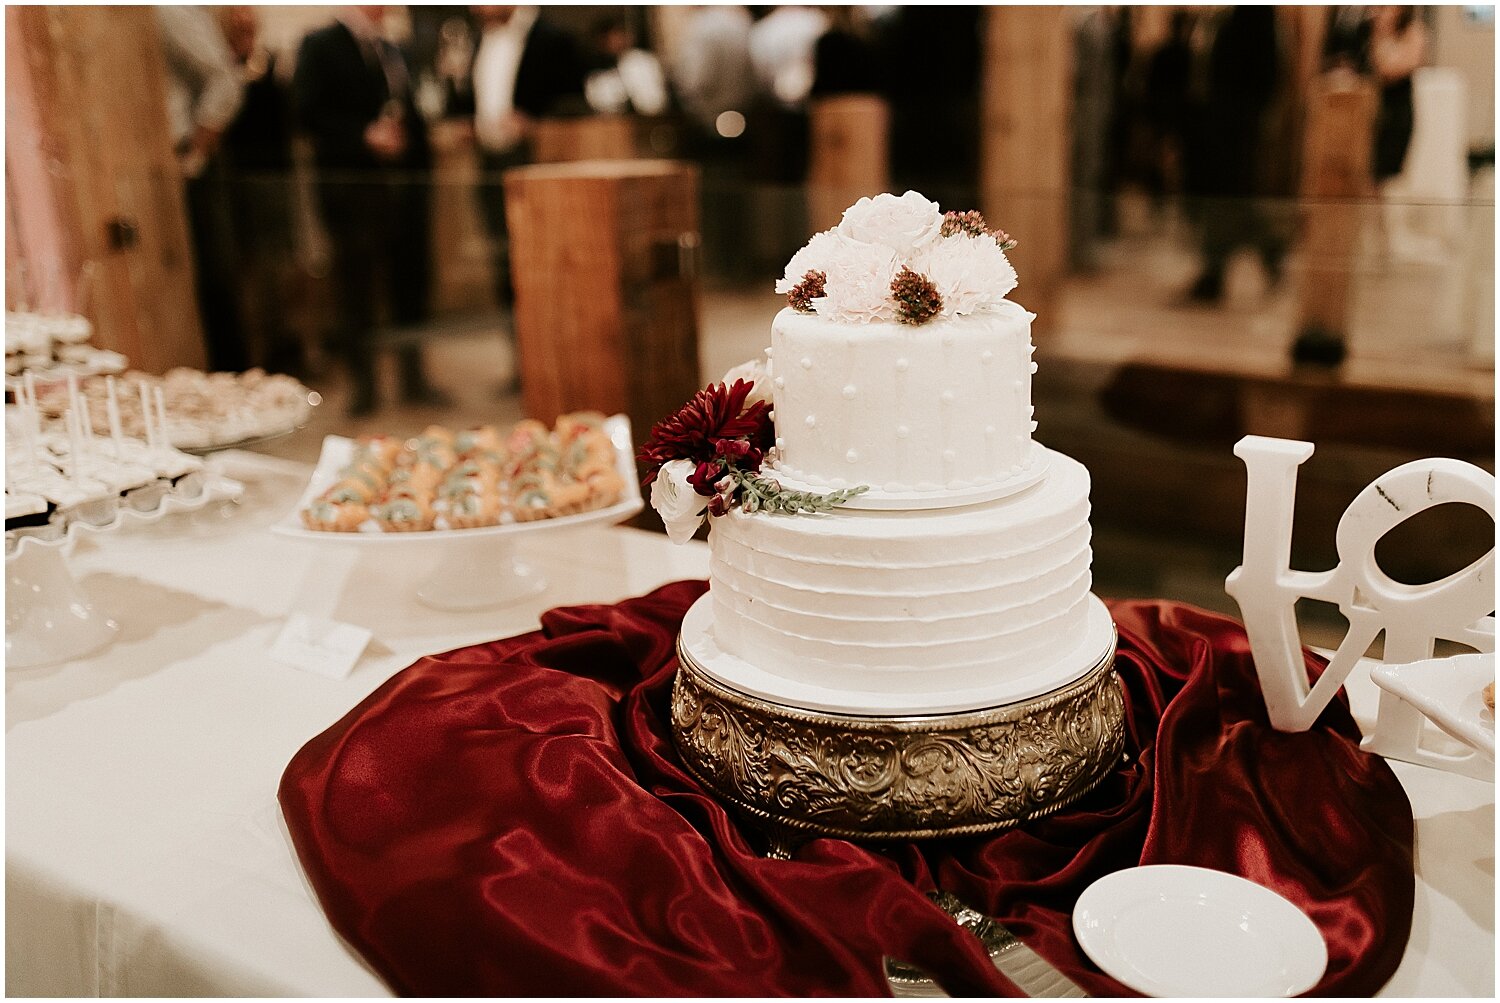  white and maroon wedding cake 